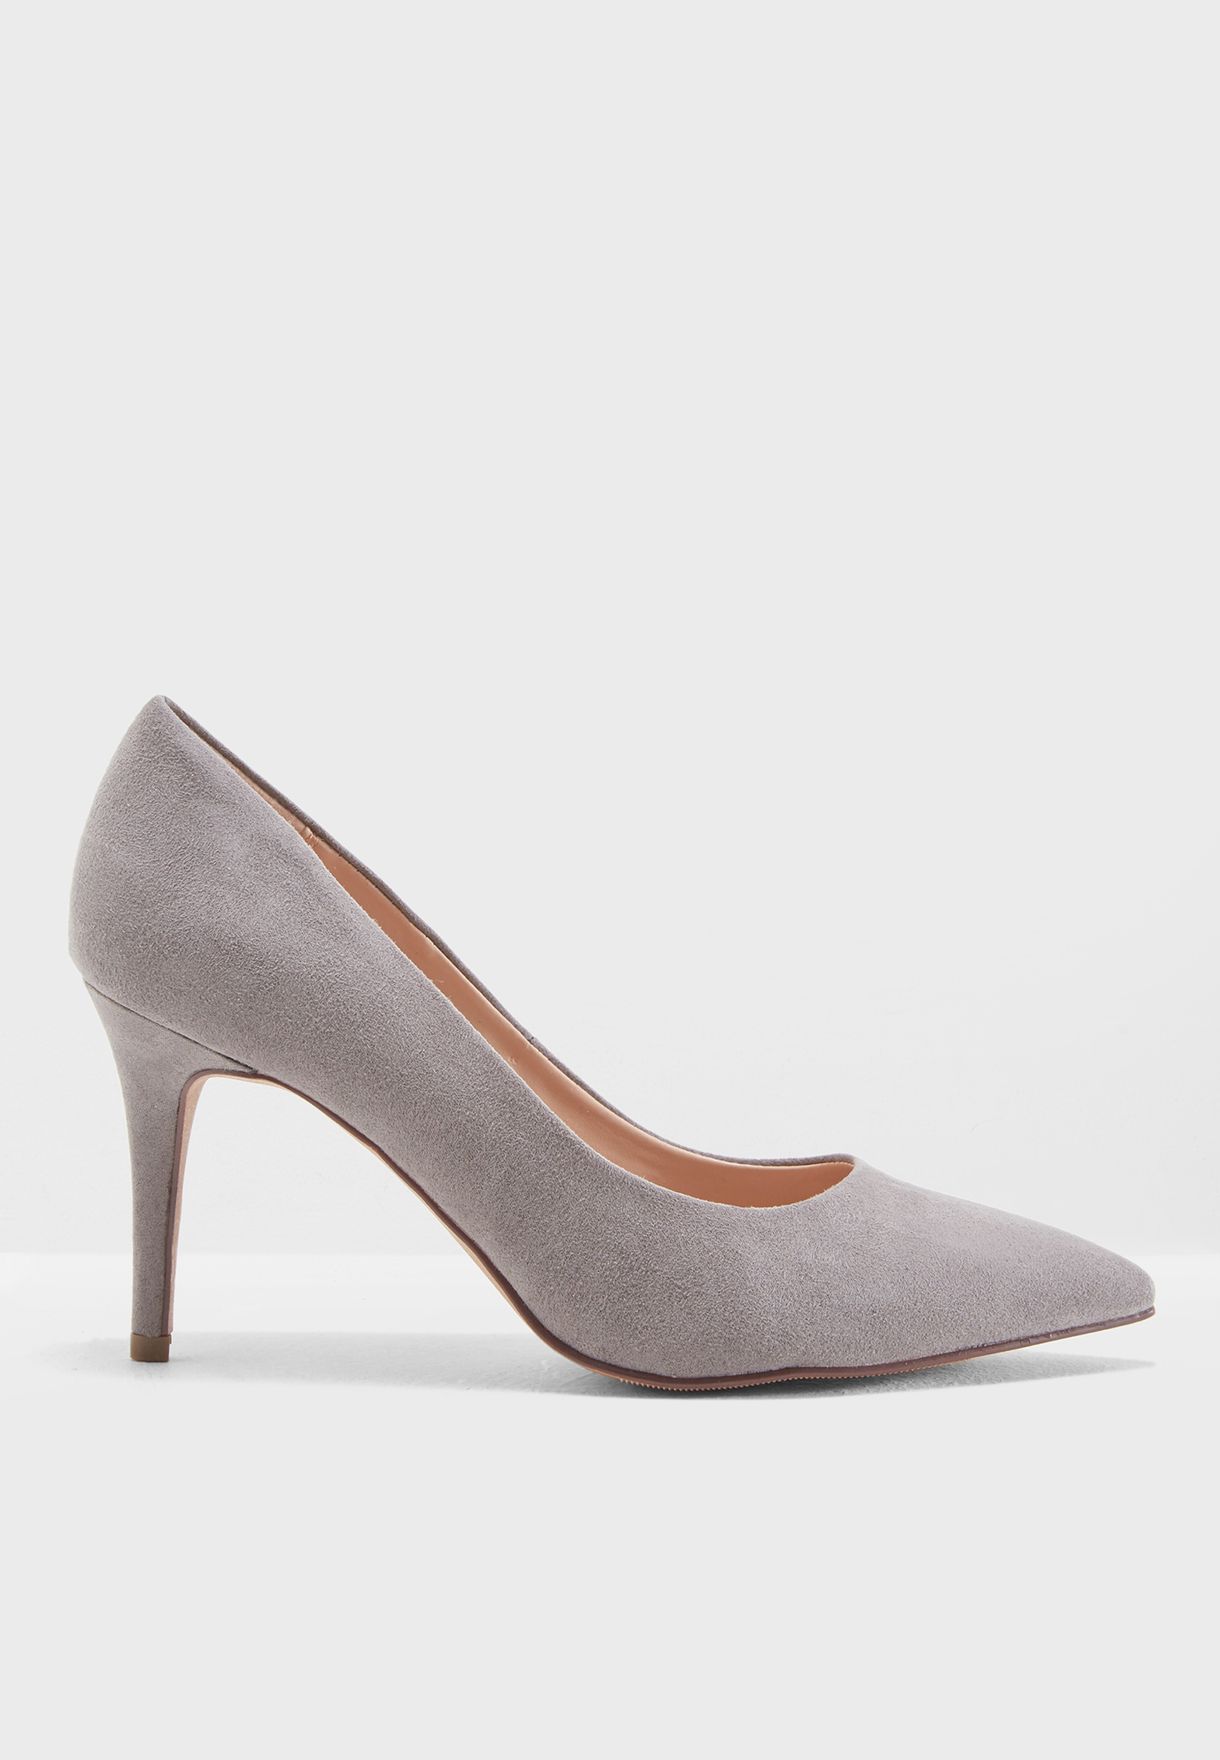 grey shoes dorothy perkins